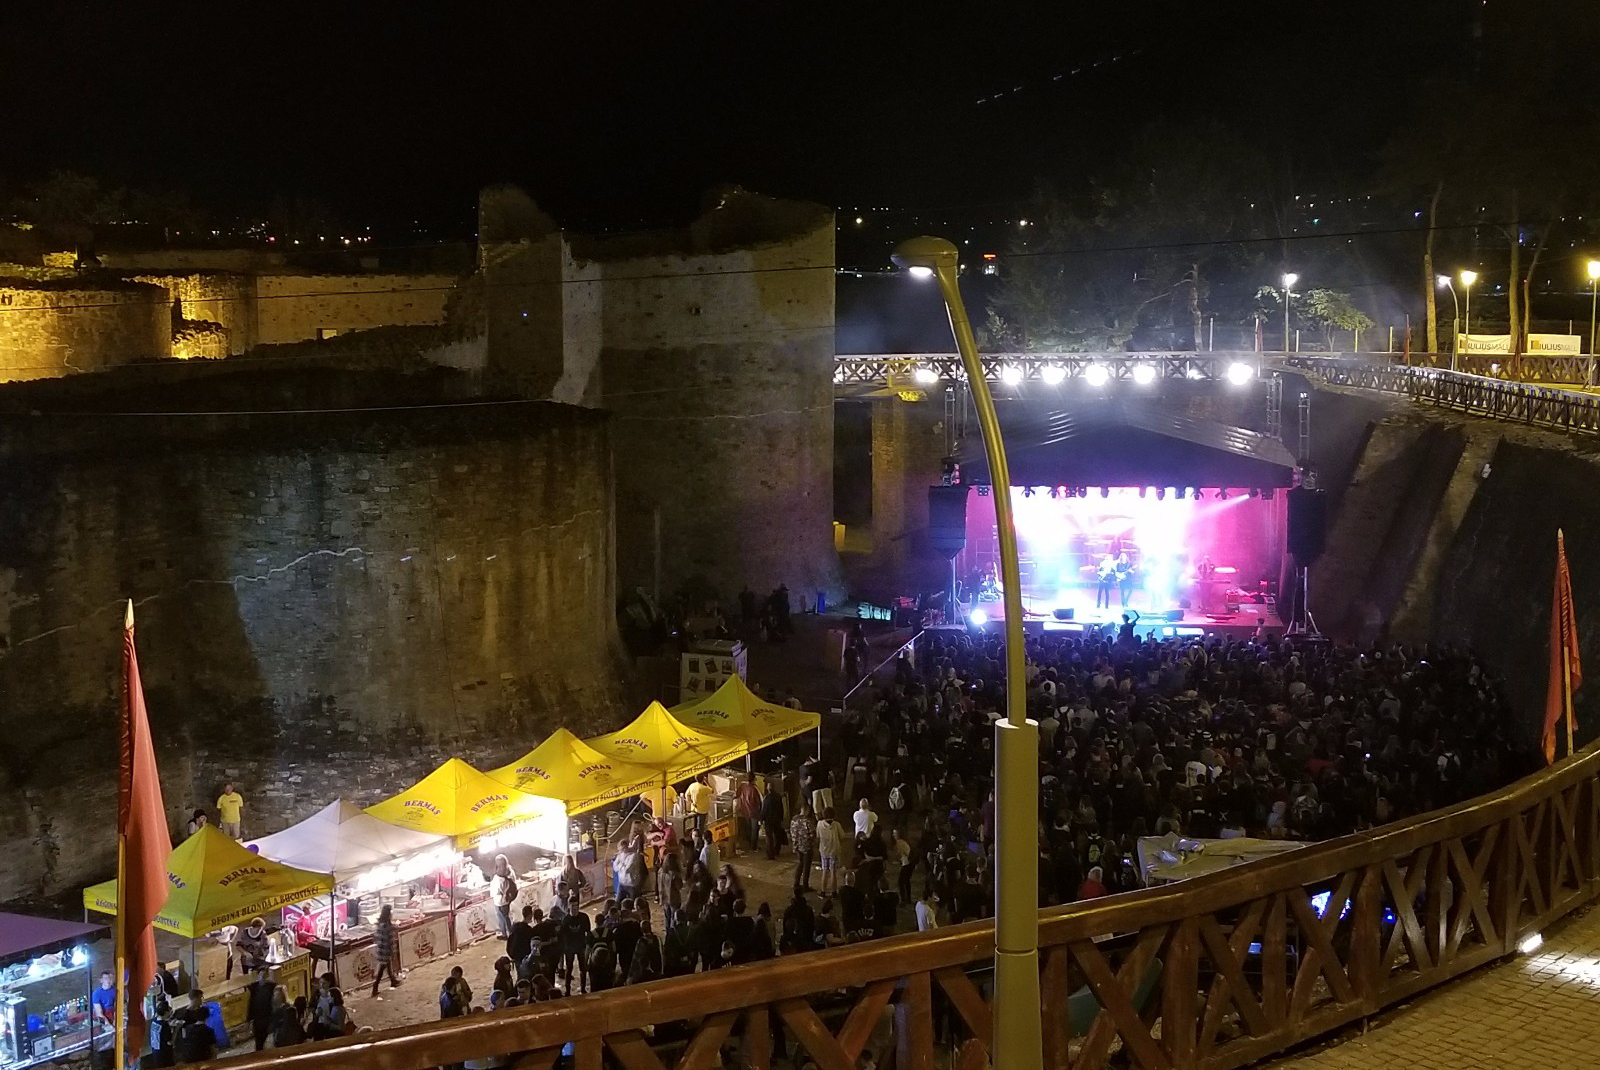  HEADLINING BUCOVINA CASTLE ROCK FESTIVAL&nbsp; 2017 - ROMANIA Suceava, Romania - 27. August 2017 